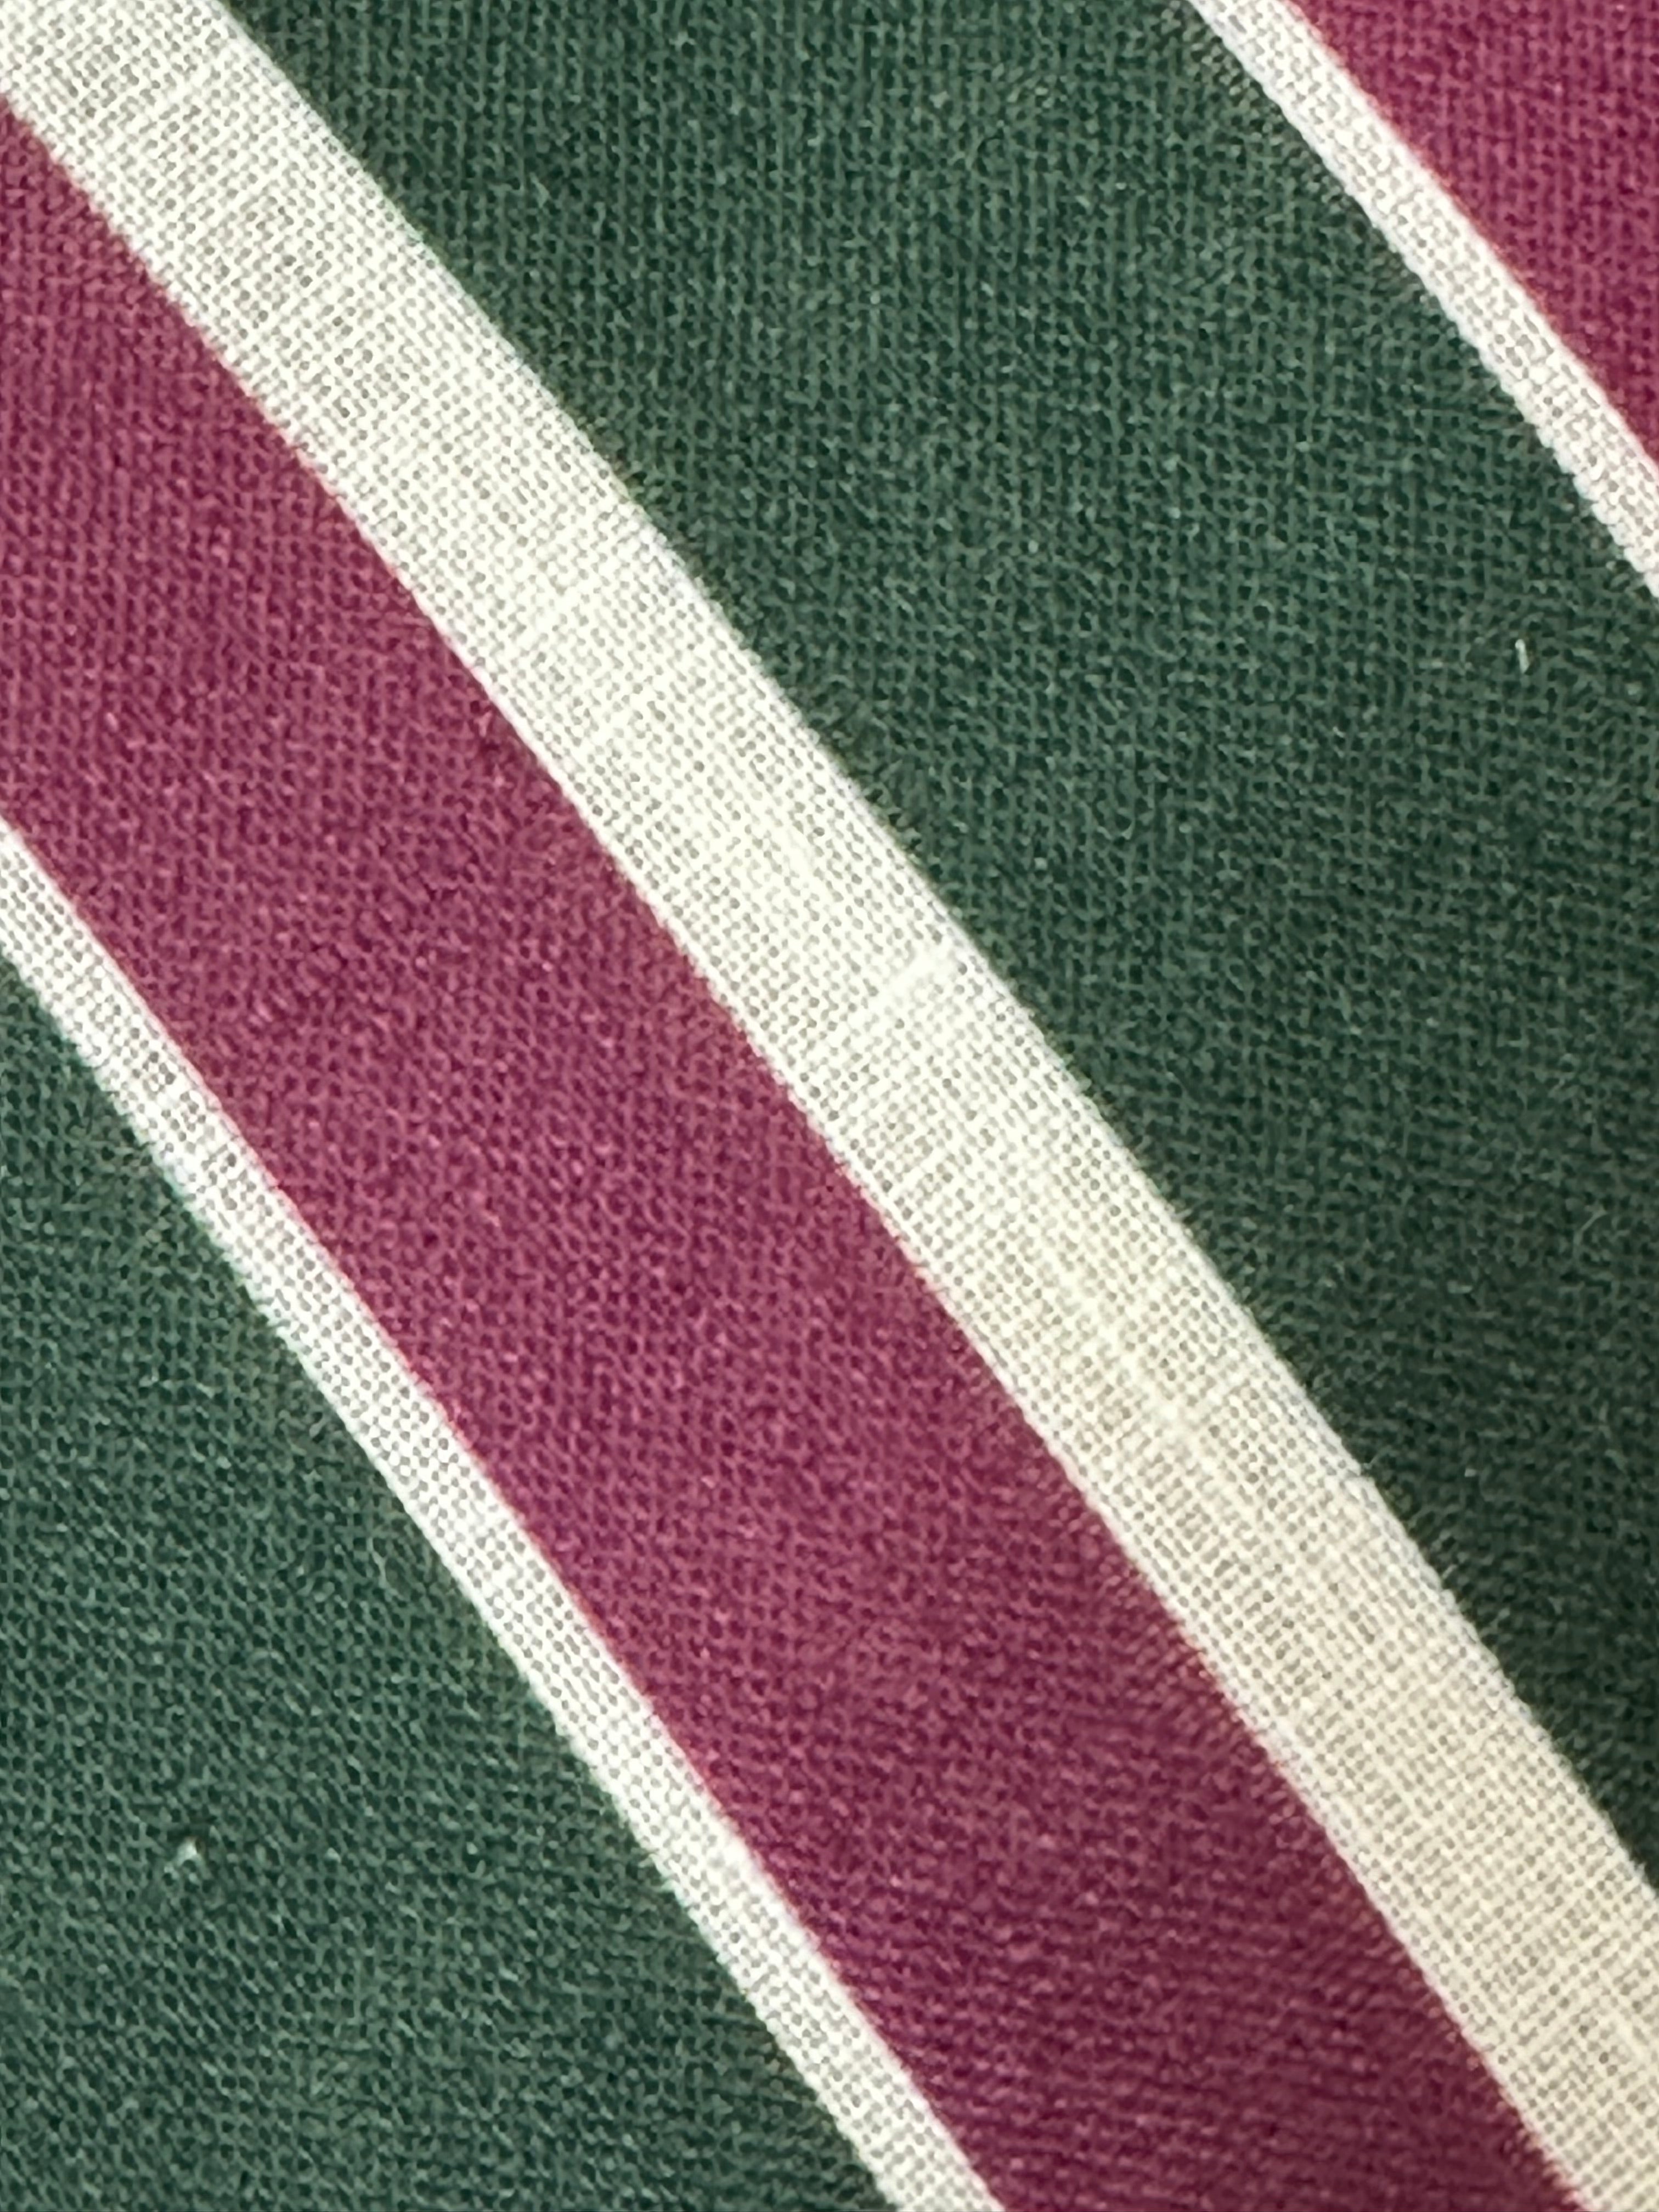 Loden and Burgundy Stripe Tie